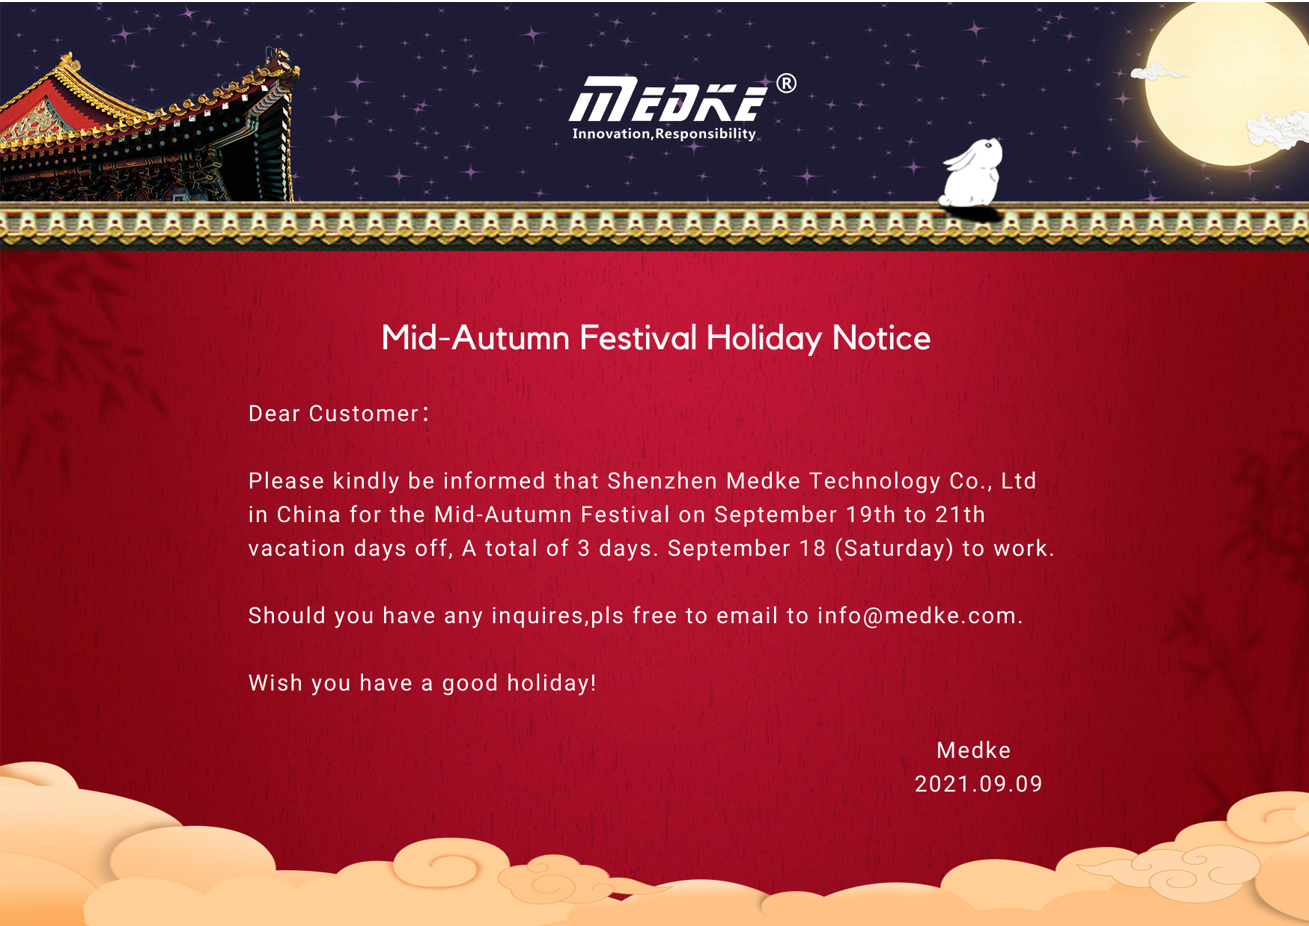 Mid-Autumn Festival holiday notice